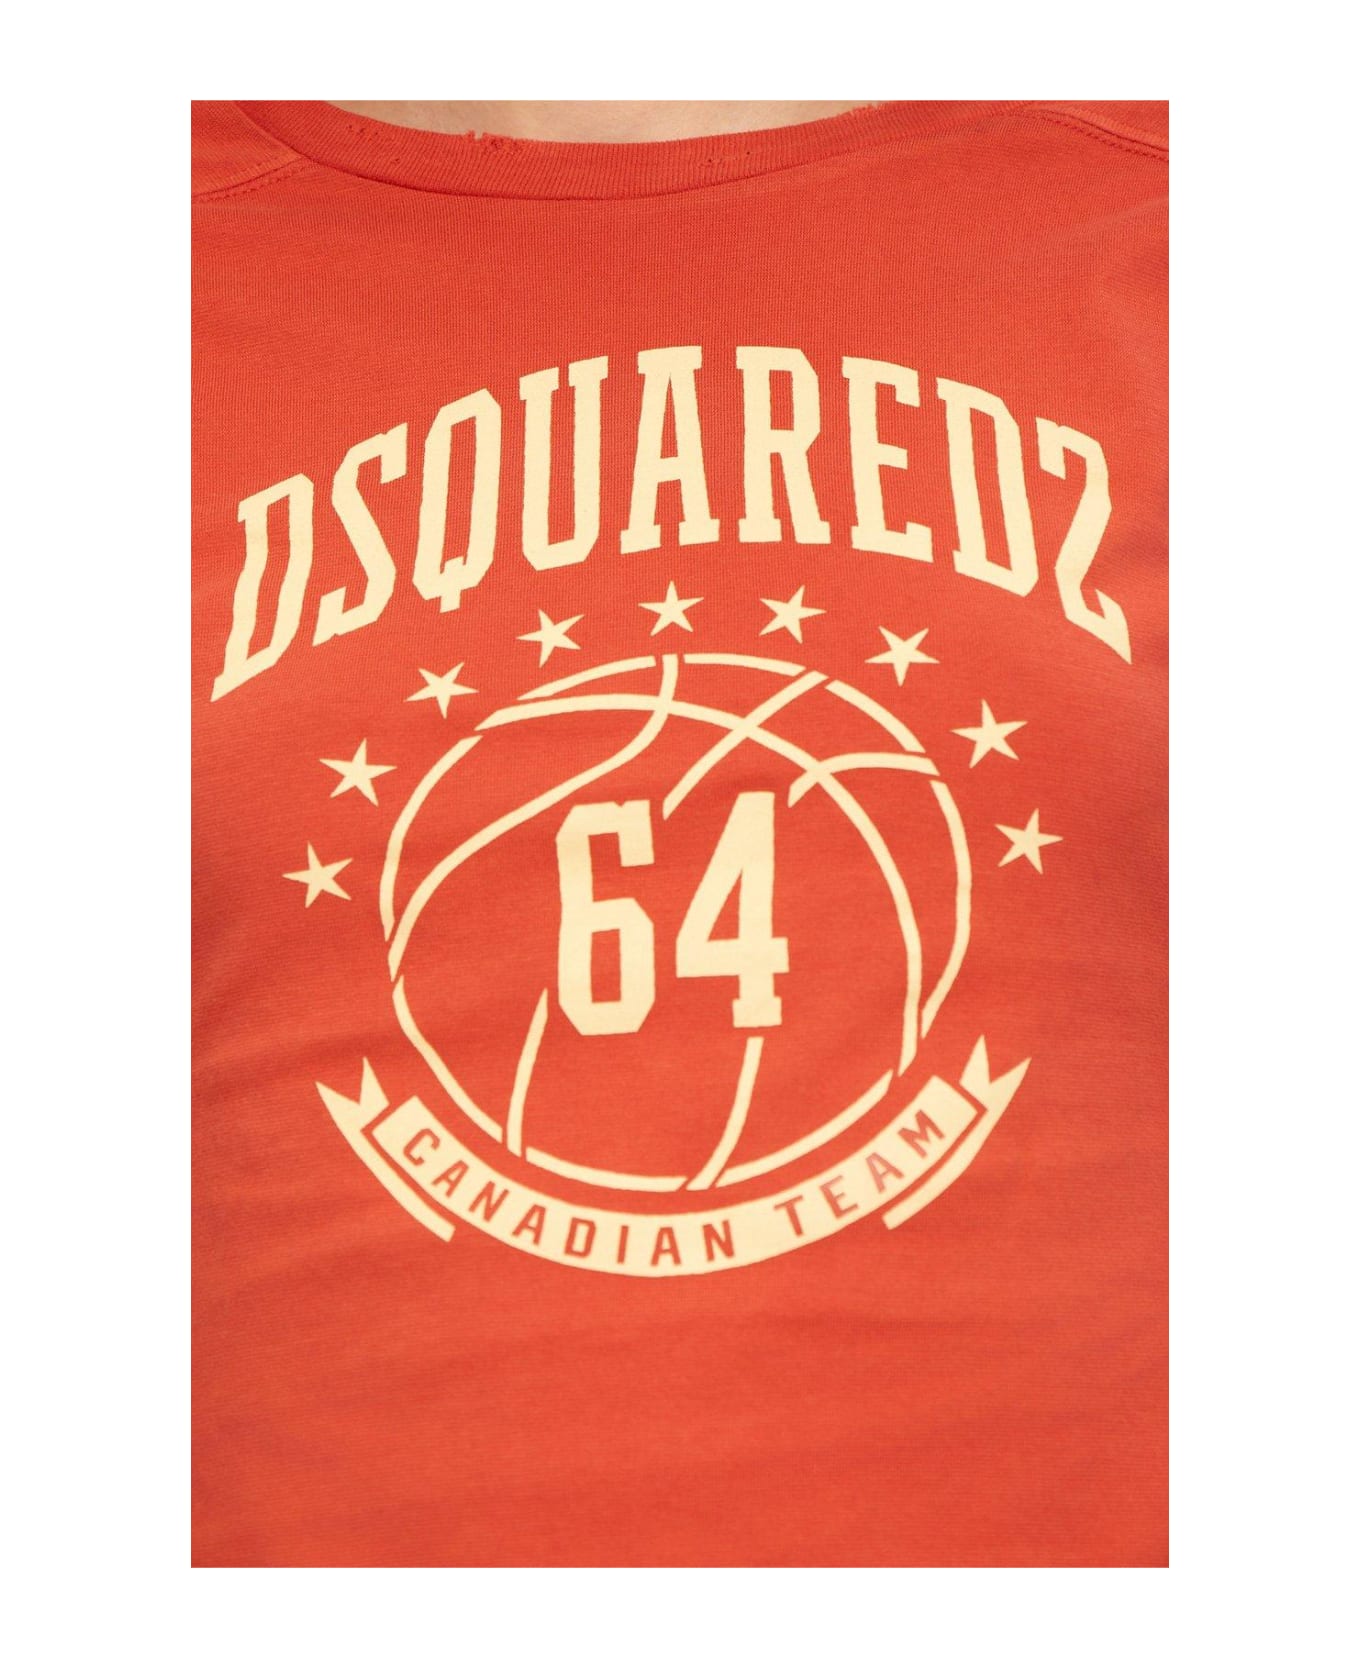 Dsquared2 Logo Printed Long-sleeved T-shirt